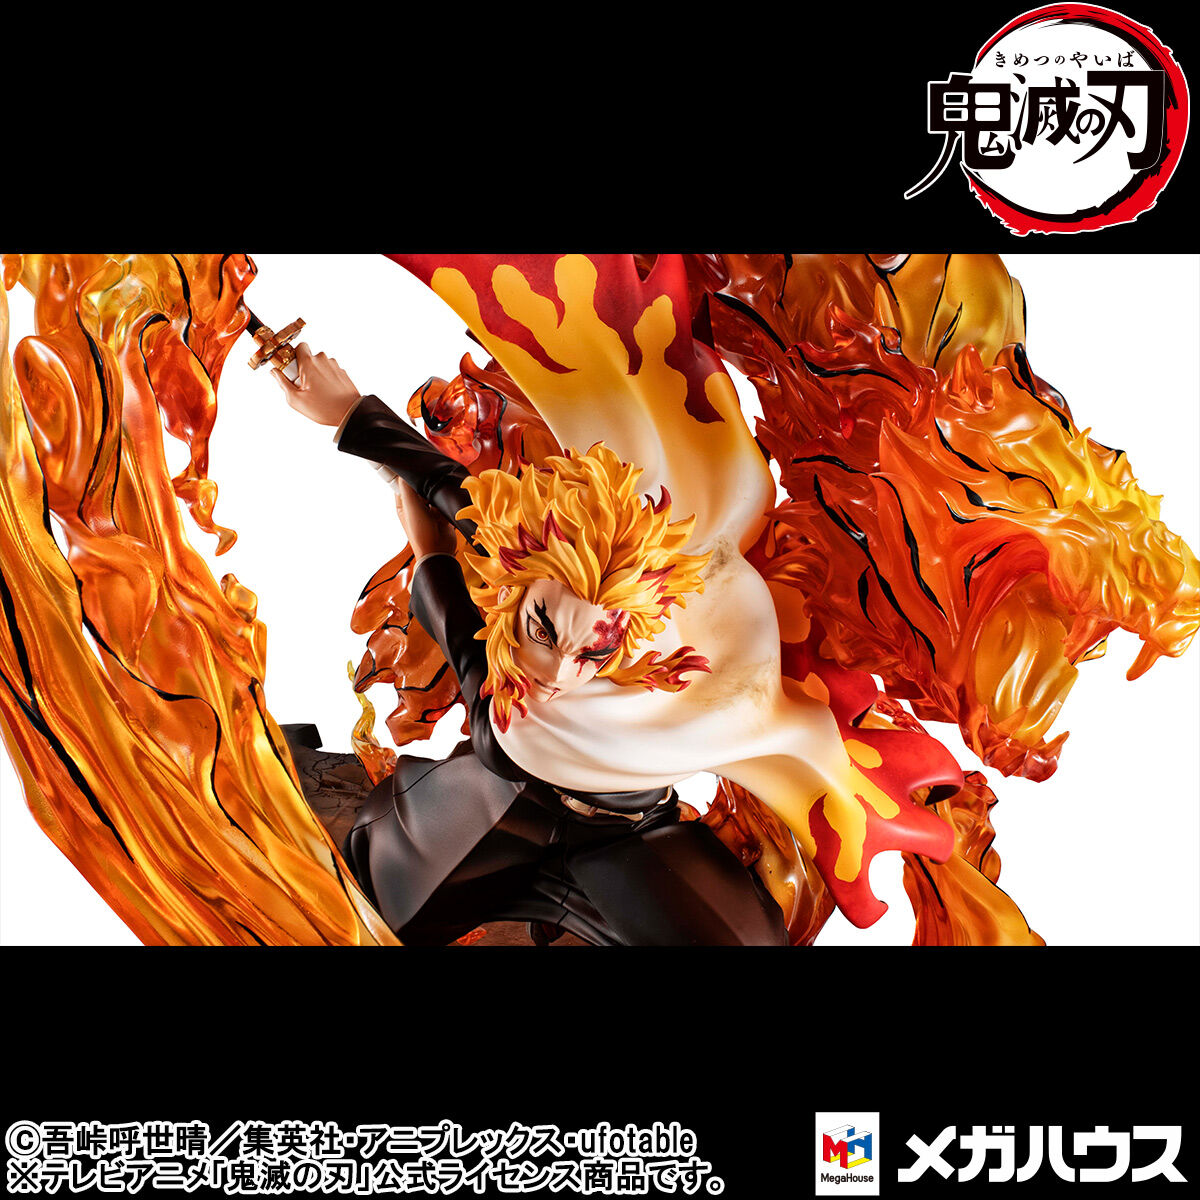 2612627) Kyojuro Rengoku Demon Slayer, Bandai Spirits Hobby